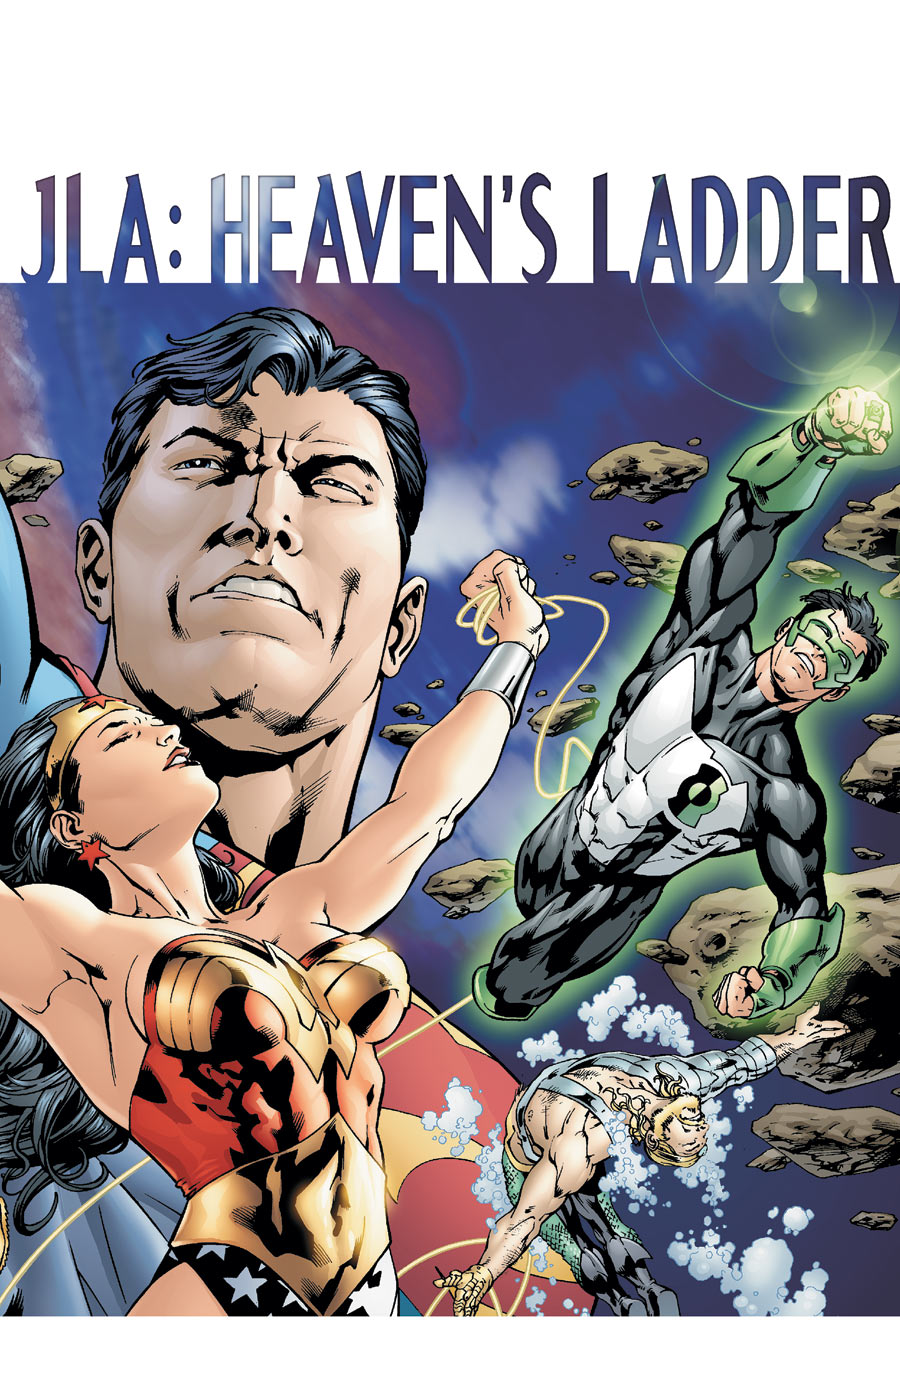 DC COMICS PRESENTS JLA: HEAVEN’S LADDER #1